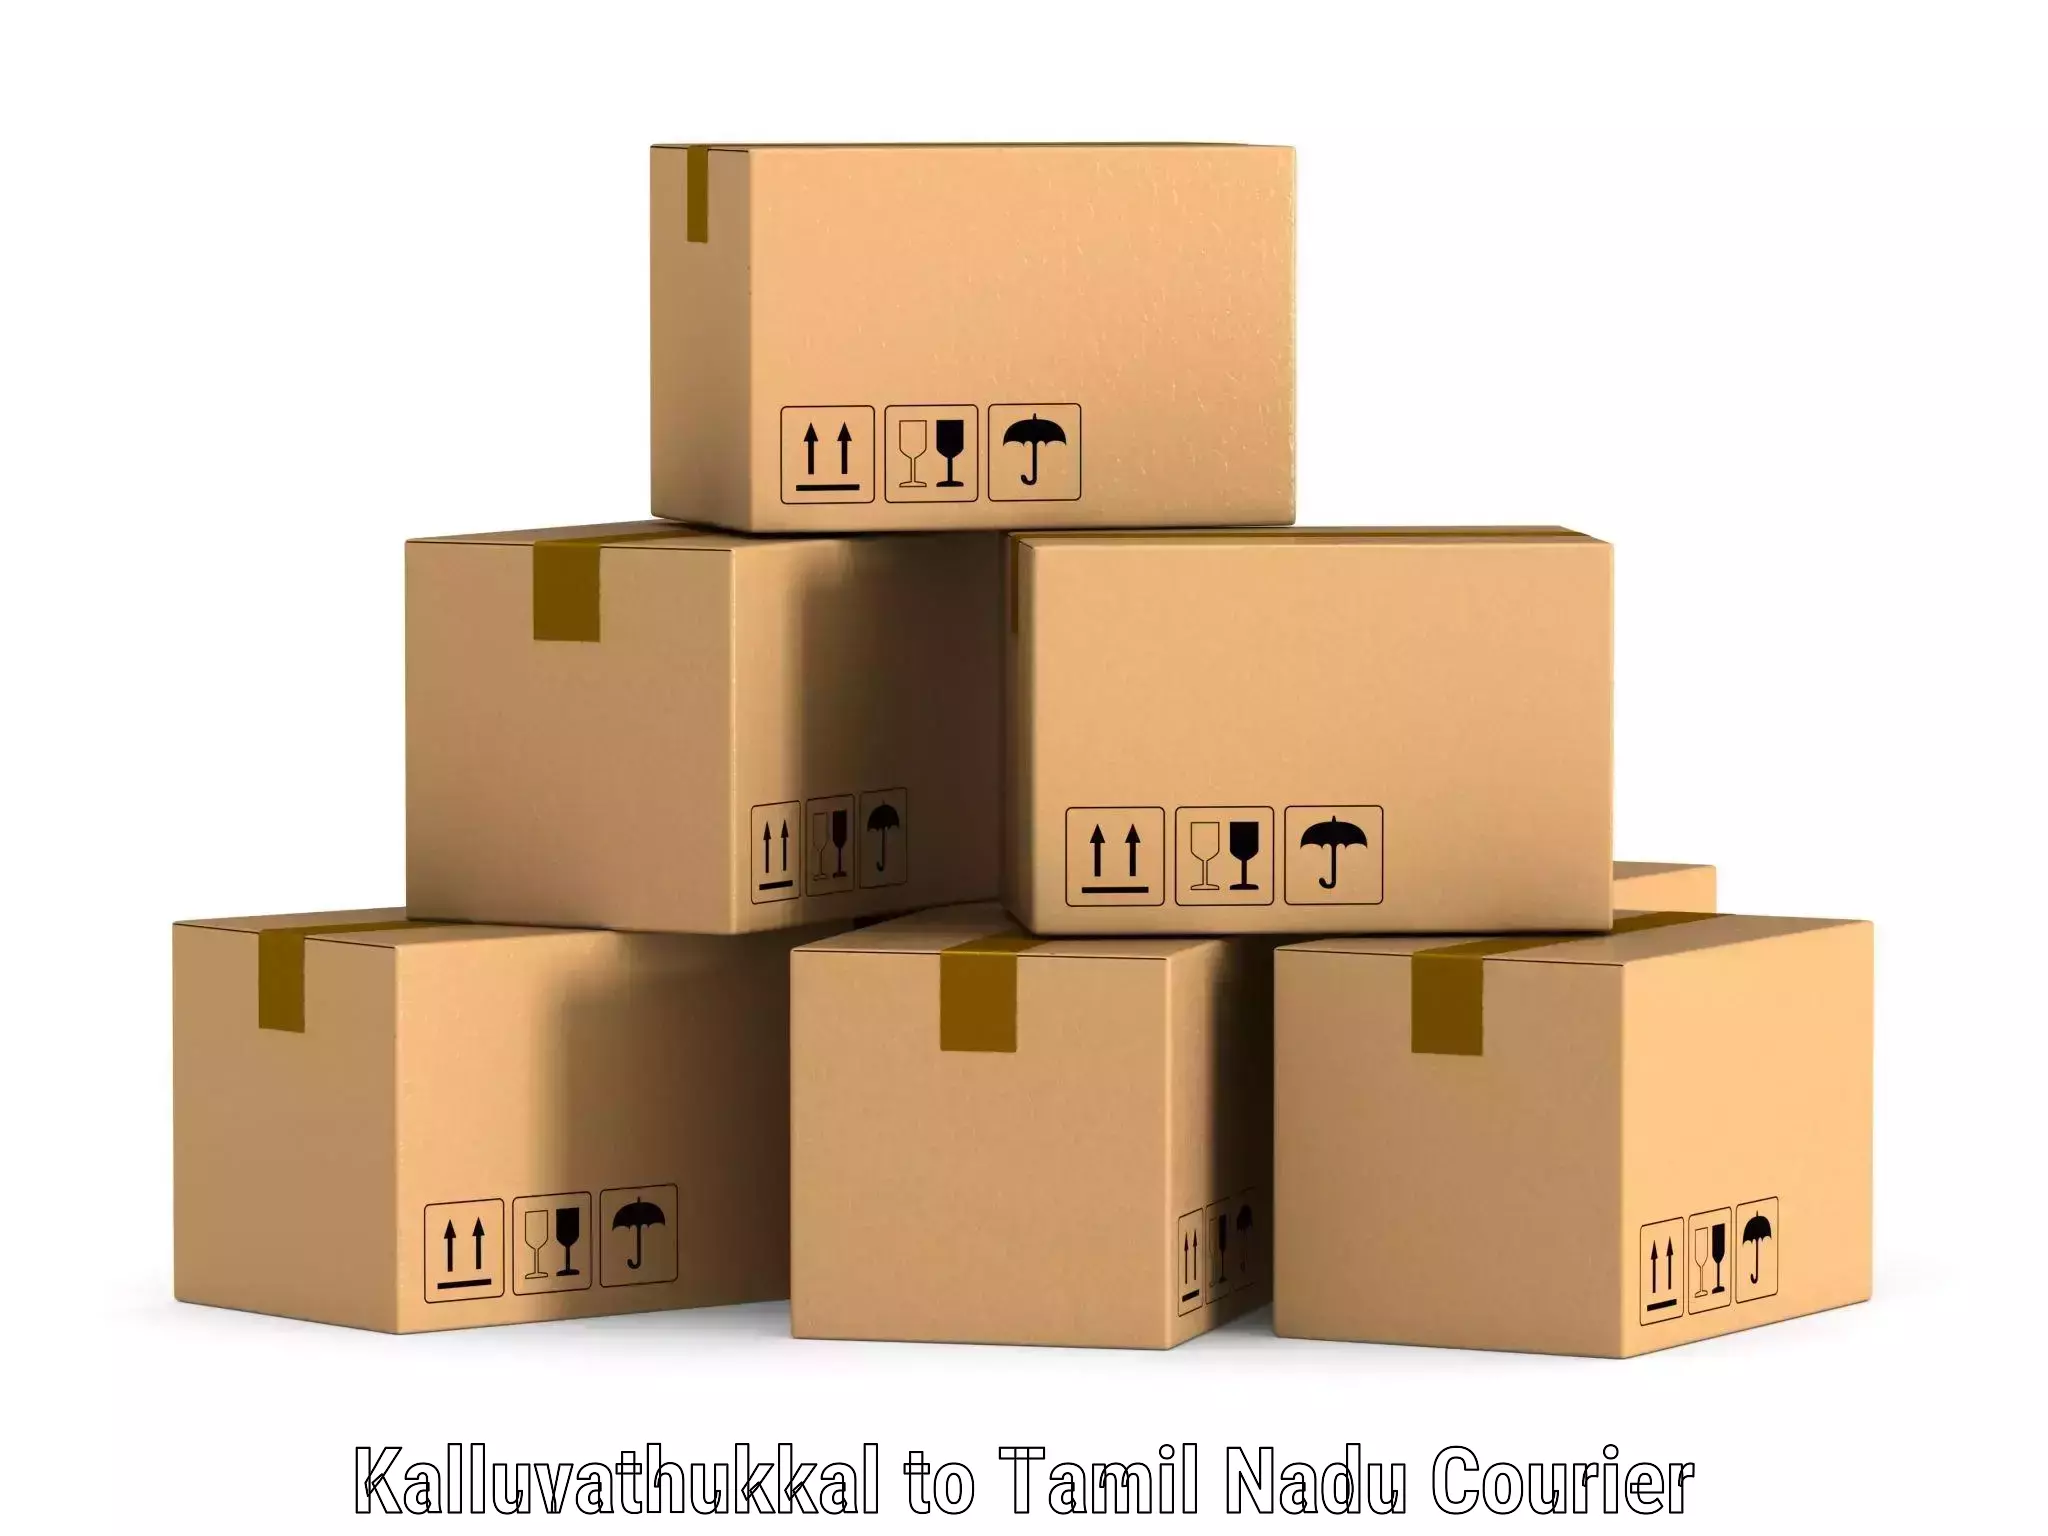 Supply chain efficiency Kalluvathukkal to Tamil Nadu